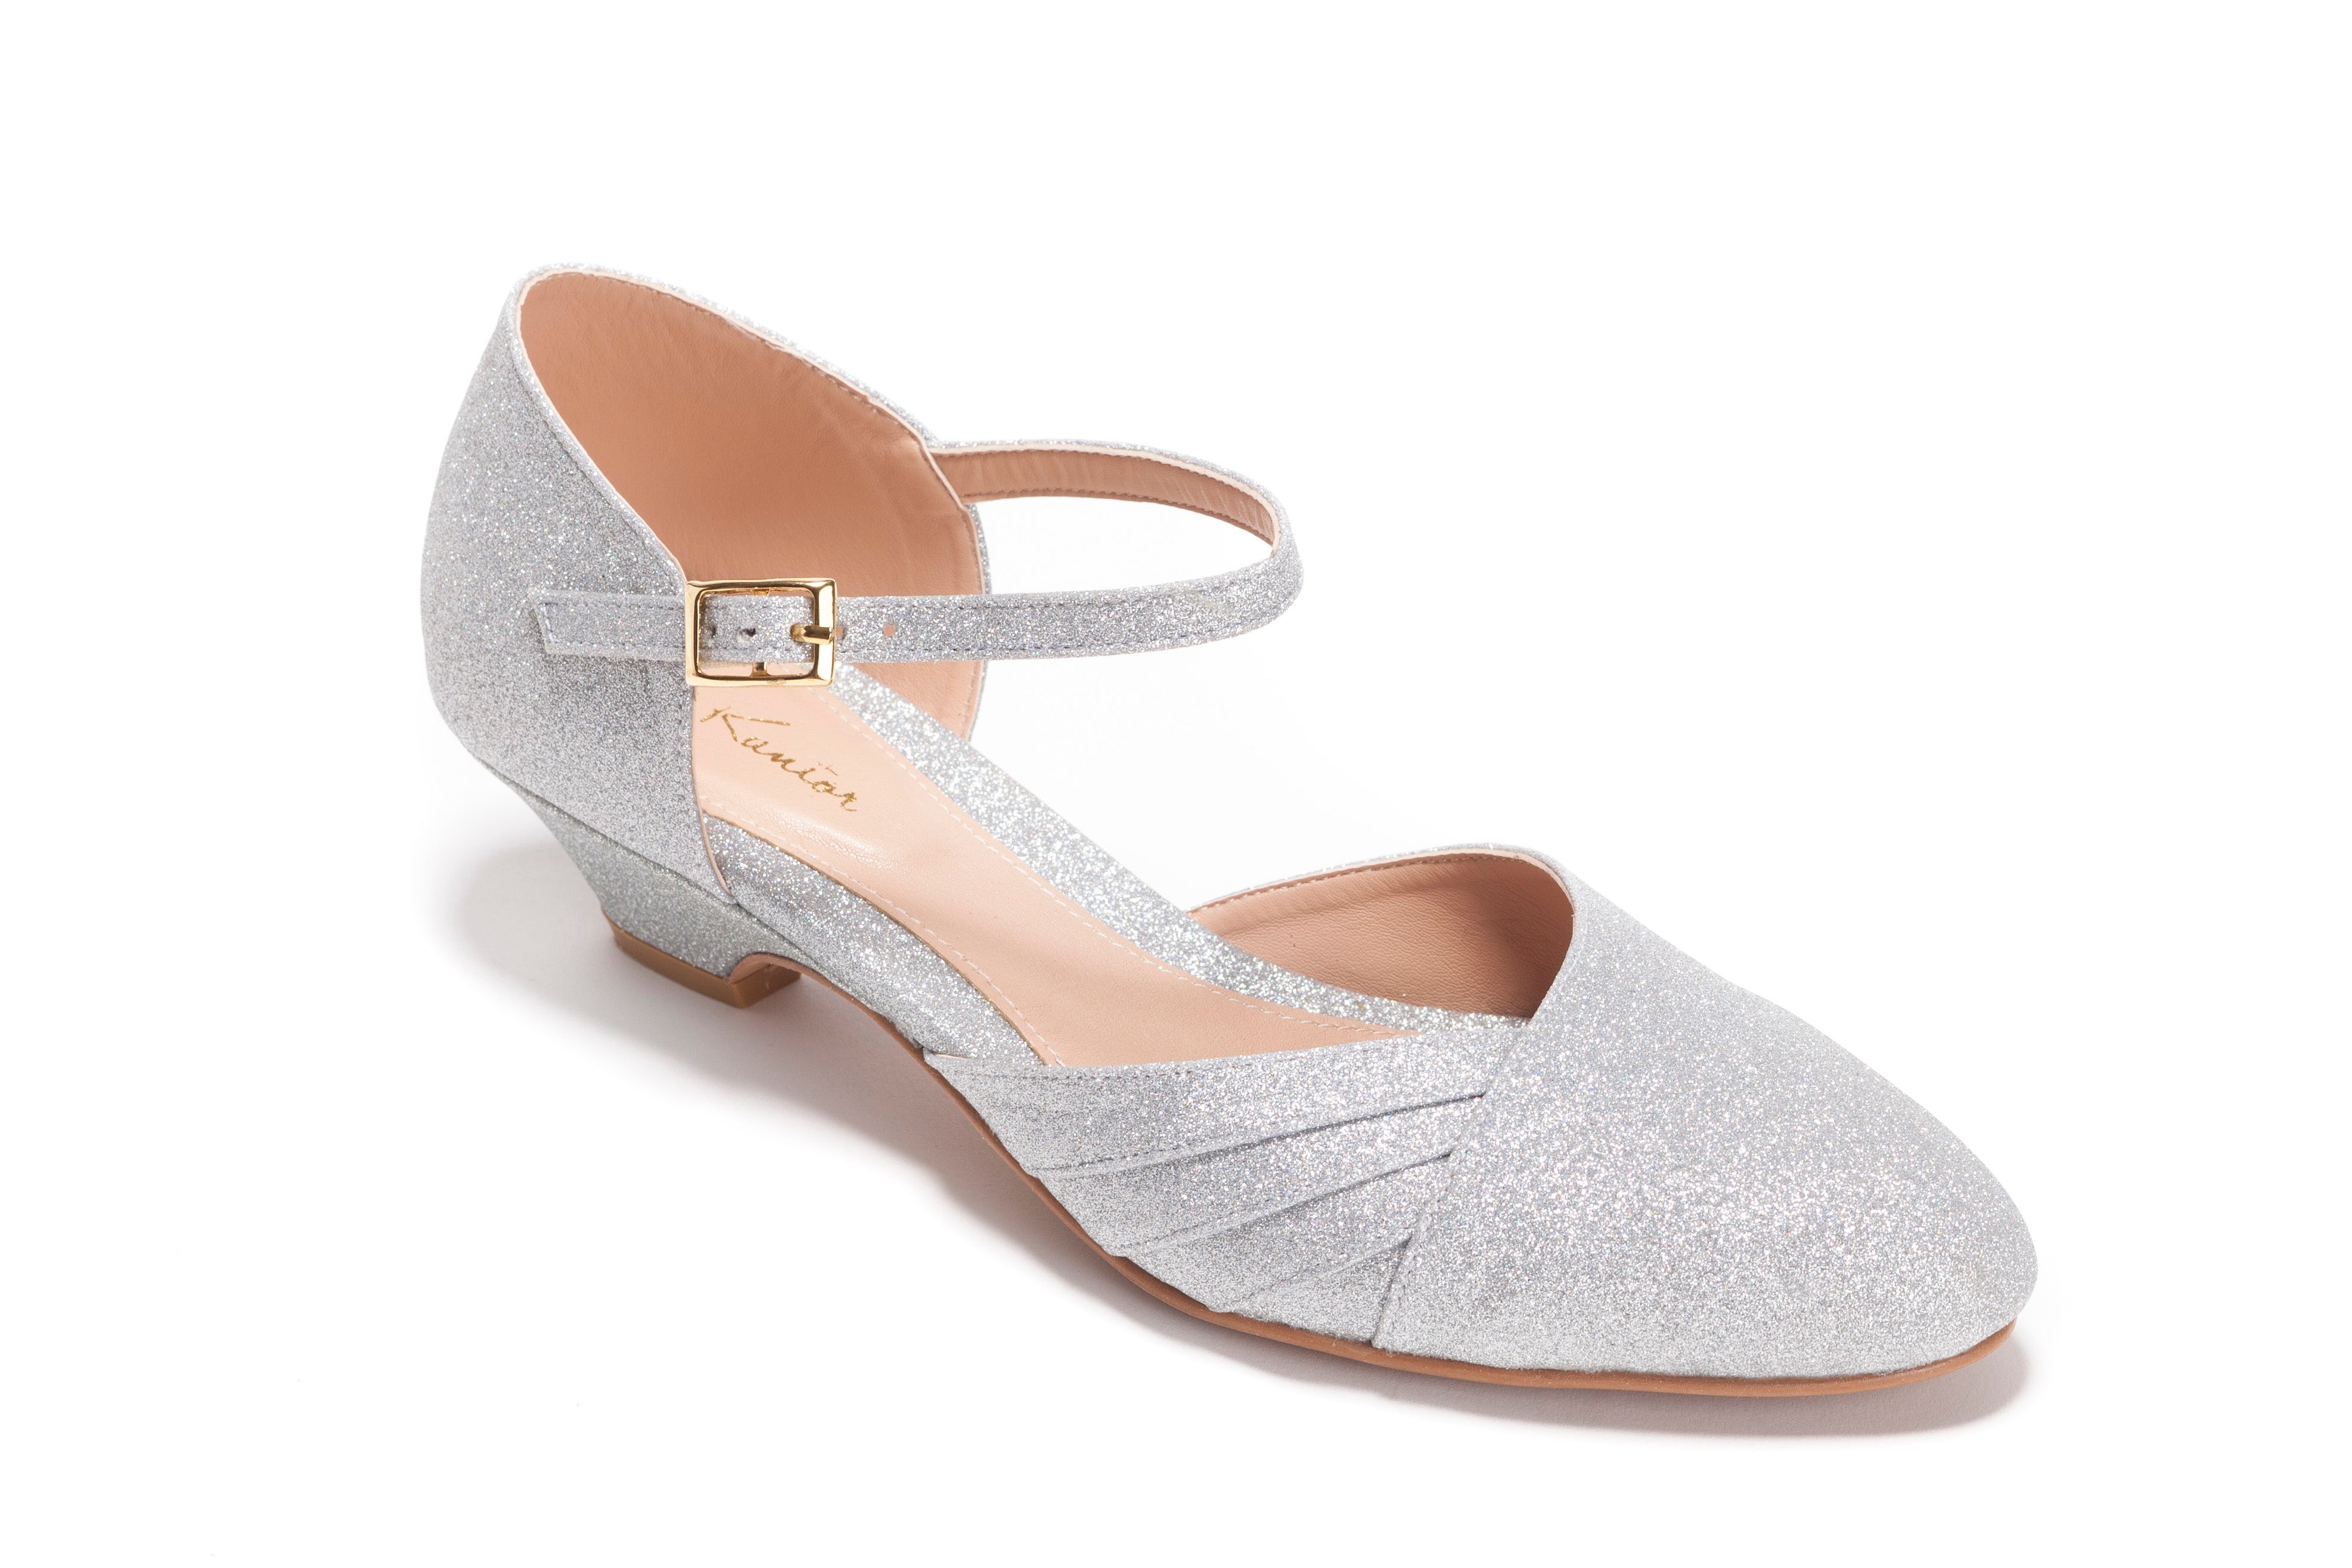 silver dress shoes with kitten heels